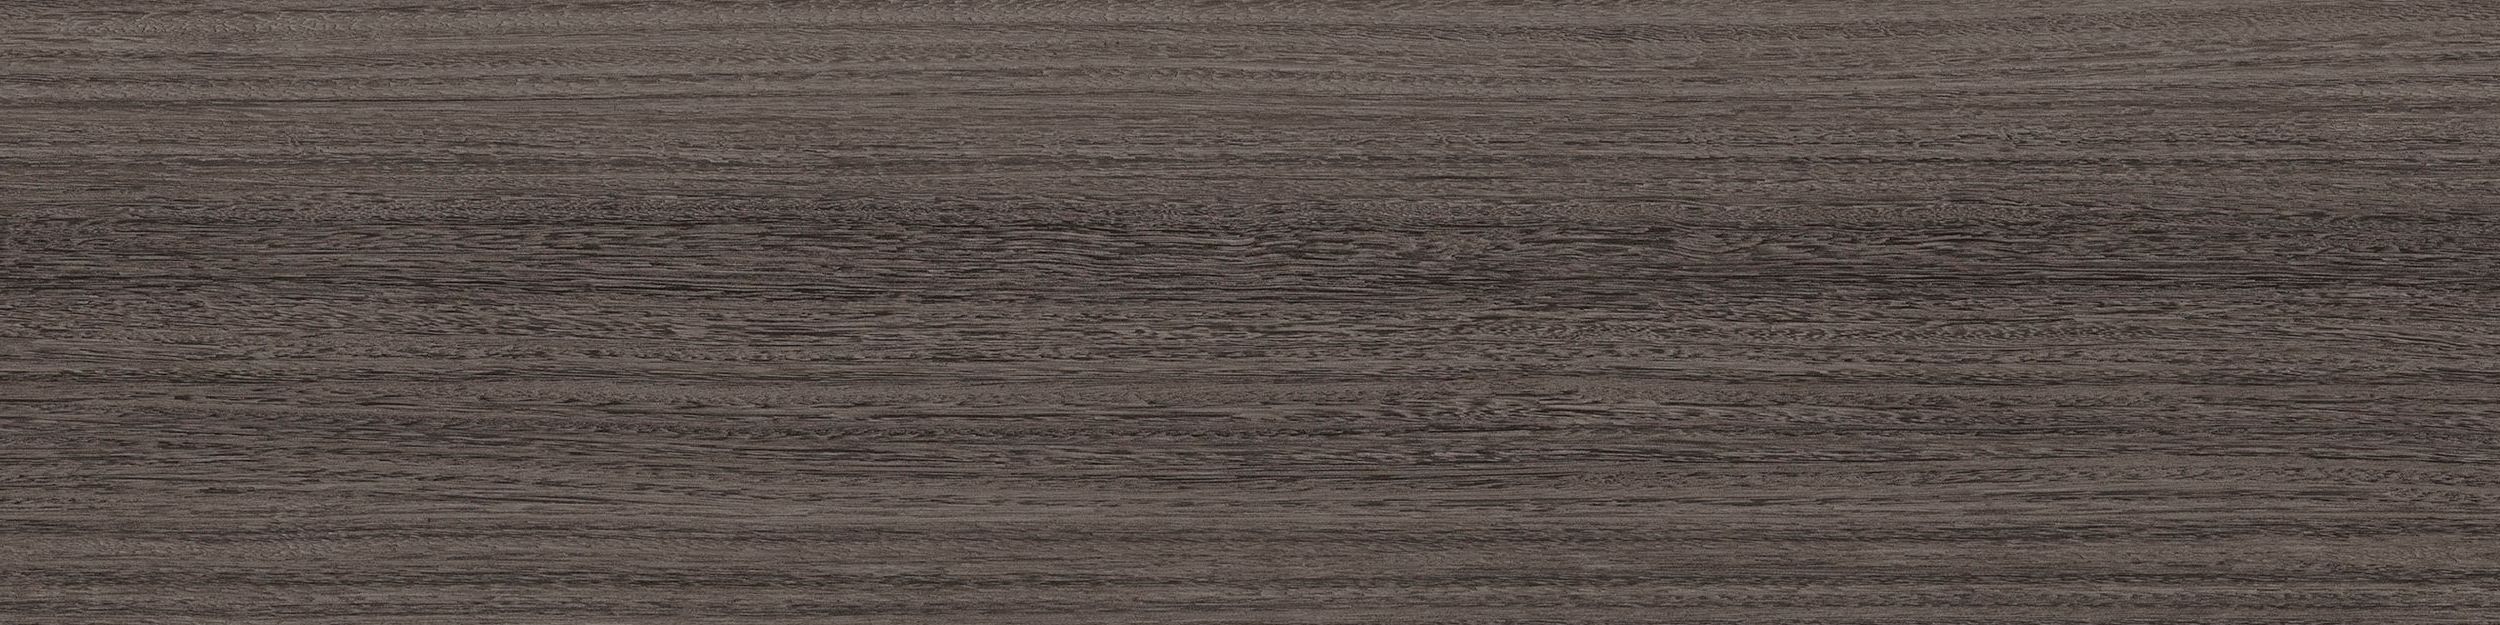 Textured Woodgrains LVT In Ironbark imagen número 1